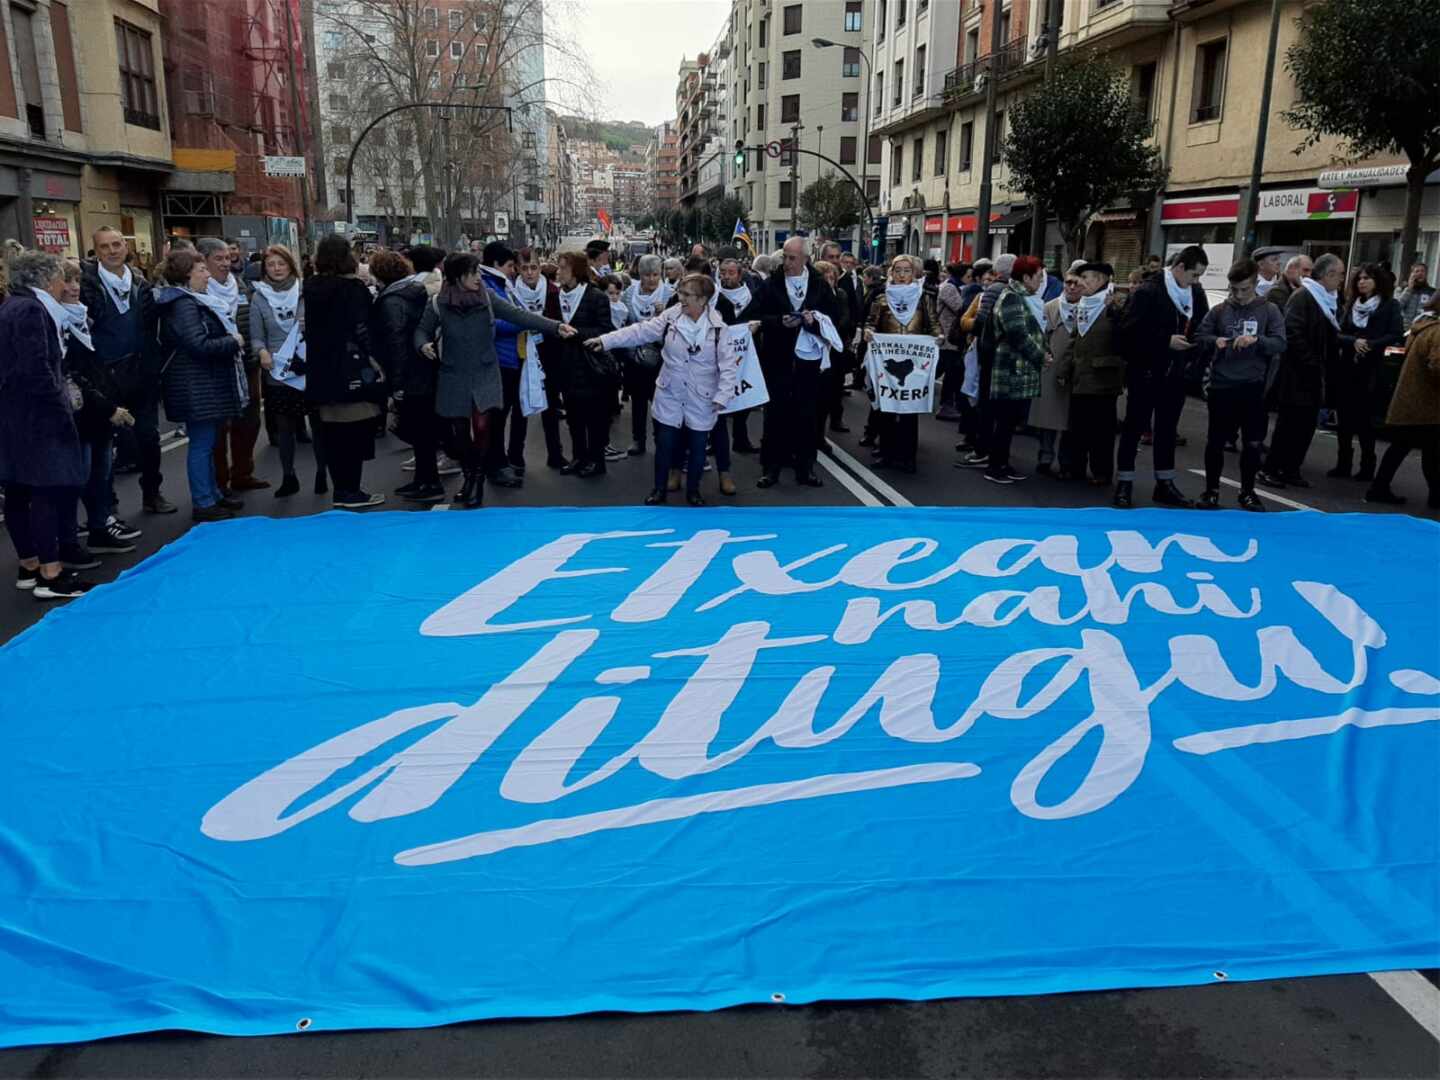 Reclaman que se acerque a los presos de ETA a Euskadi durante la desescalada